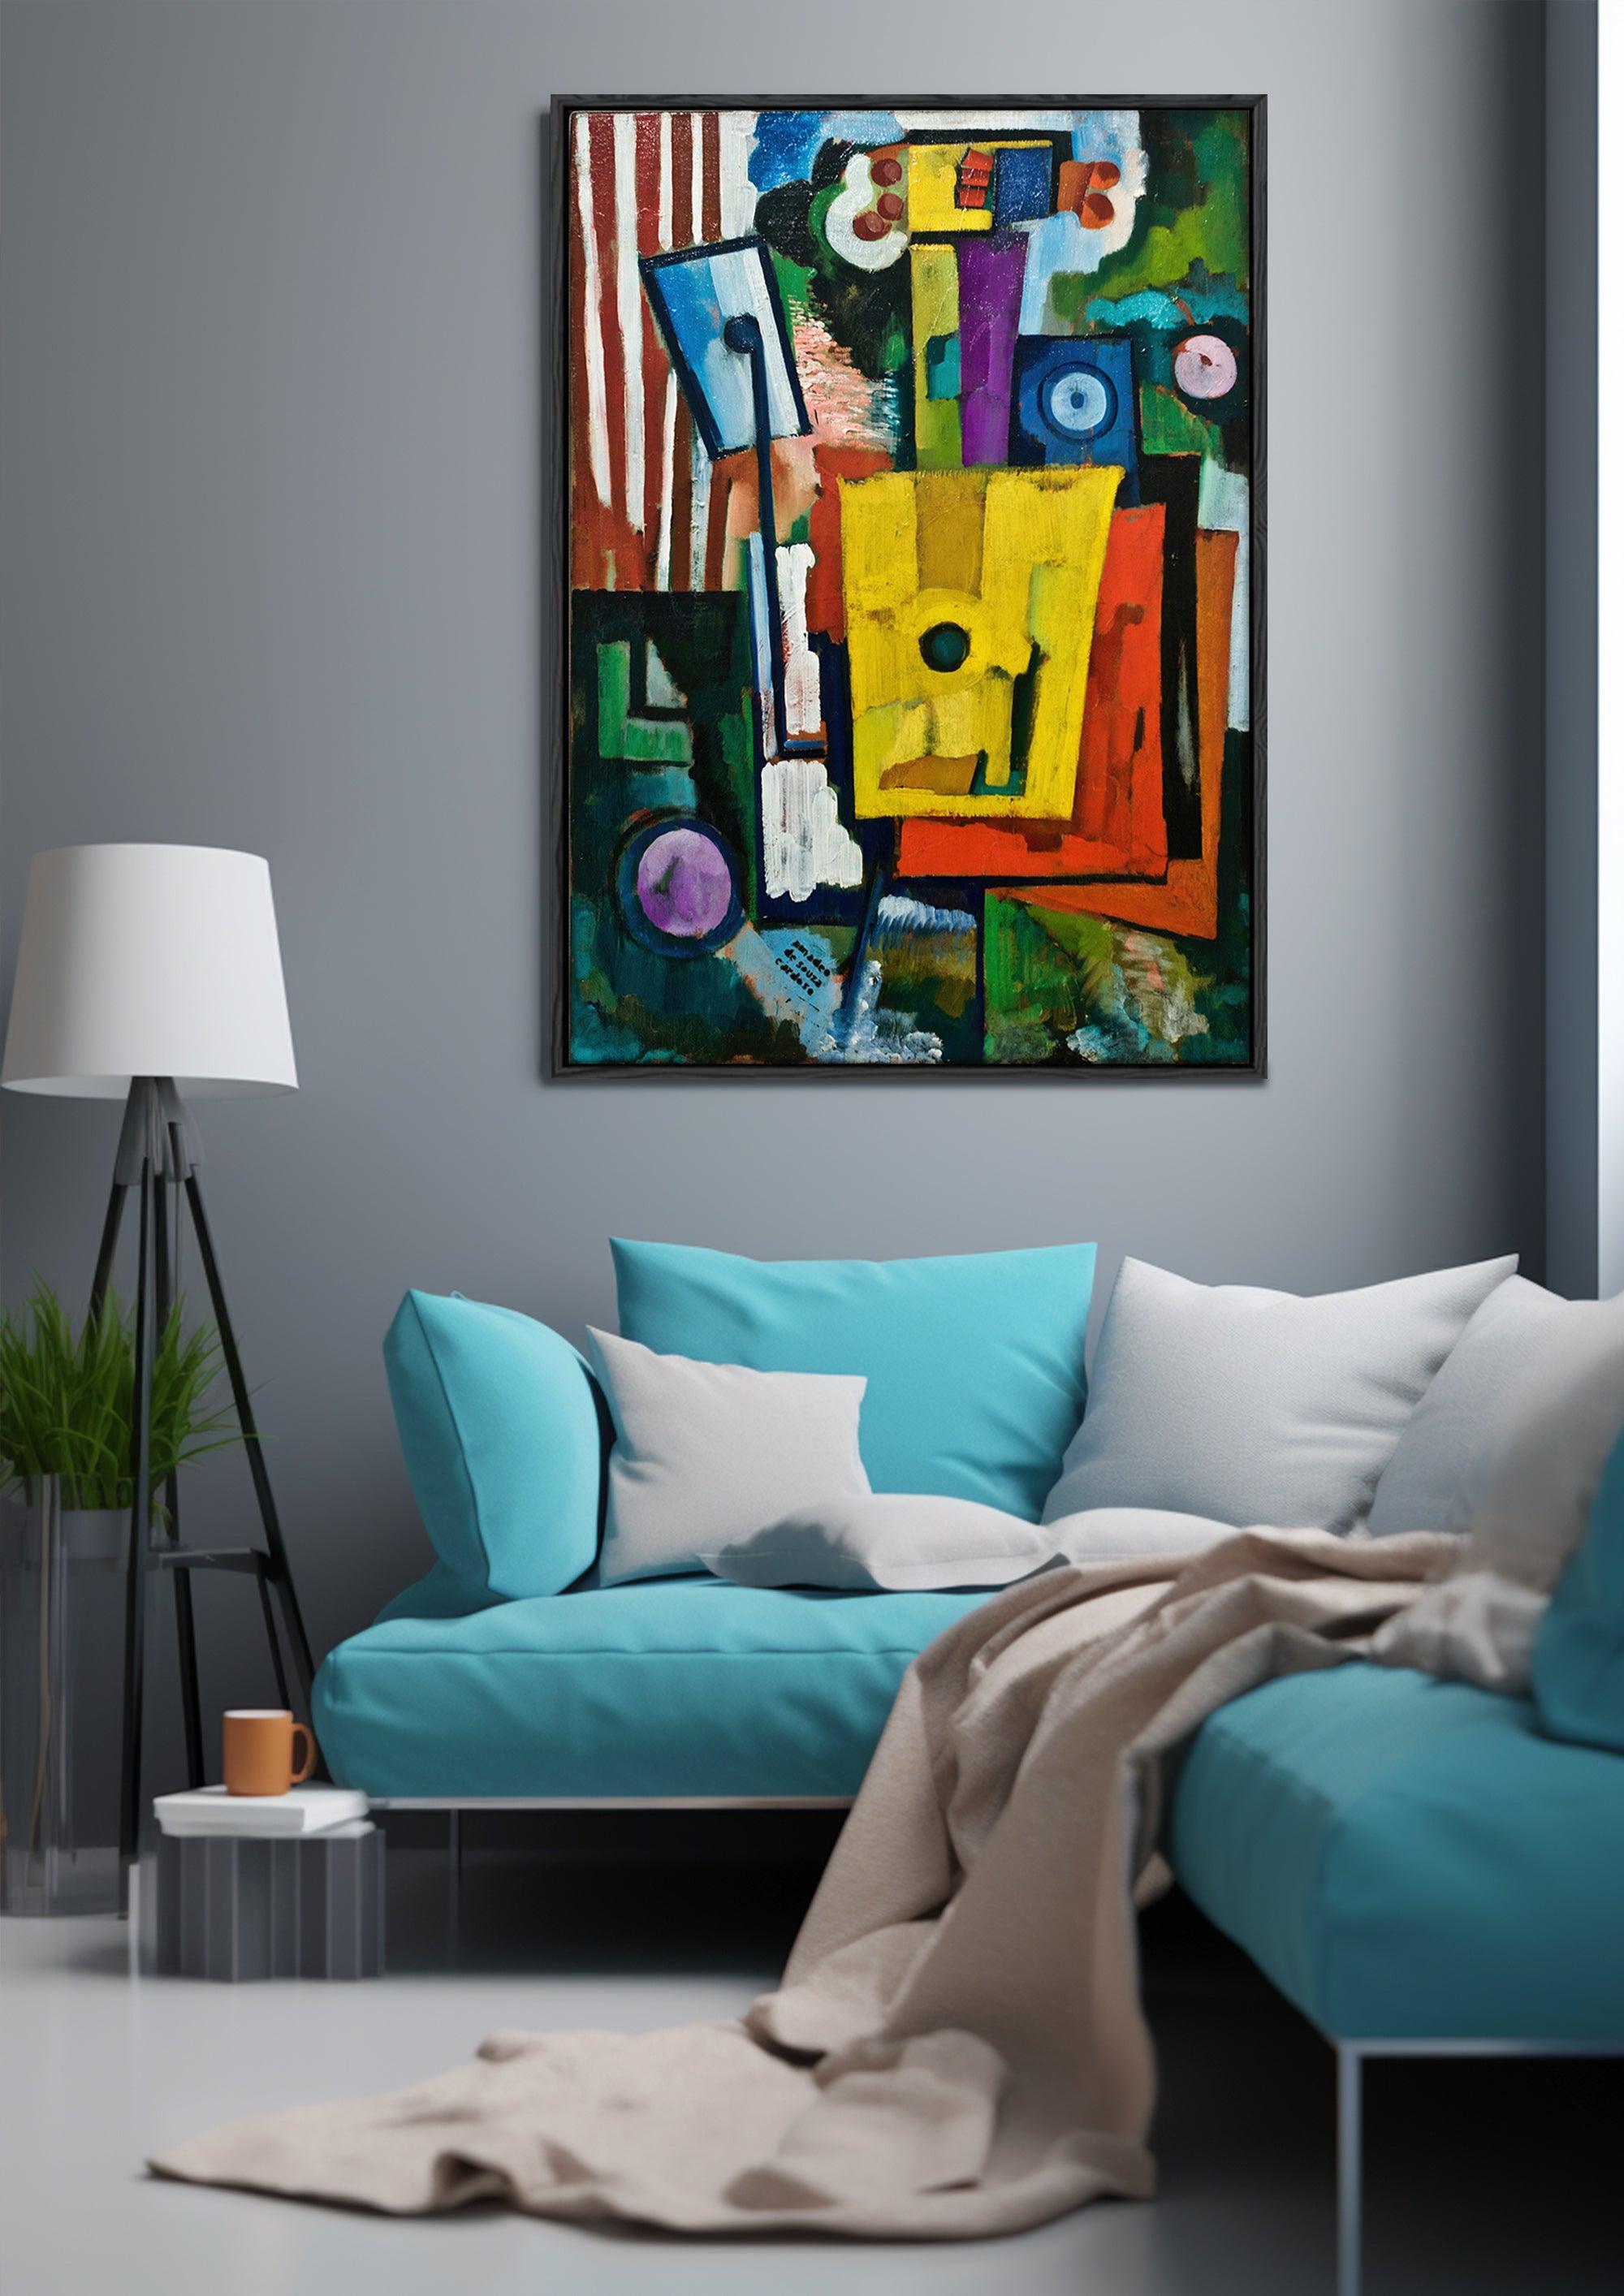 Cubism,Wall Art,Canvas Print,Framed,Home Decor CC 6 - ParfaiteArt